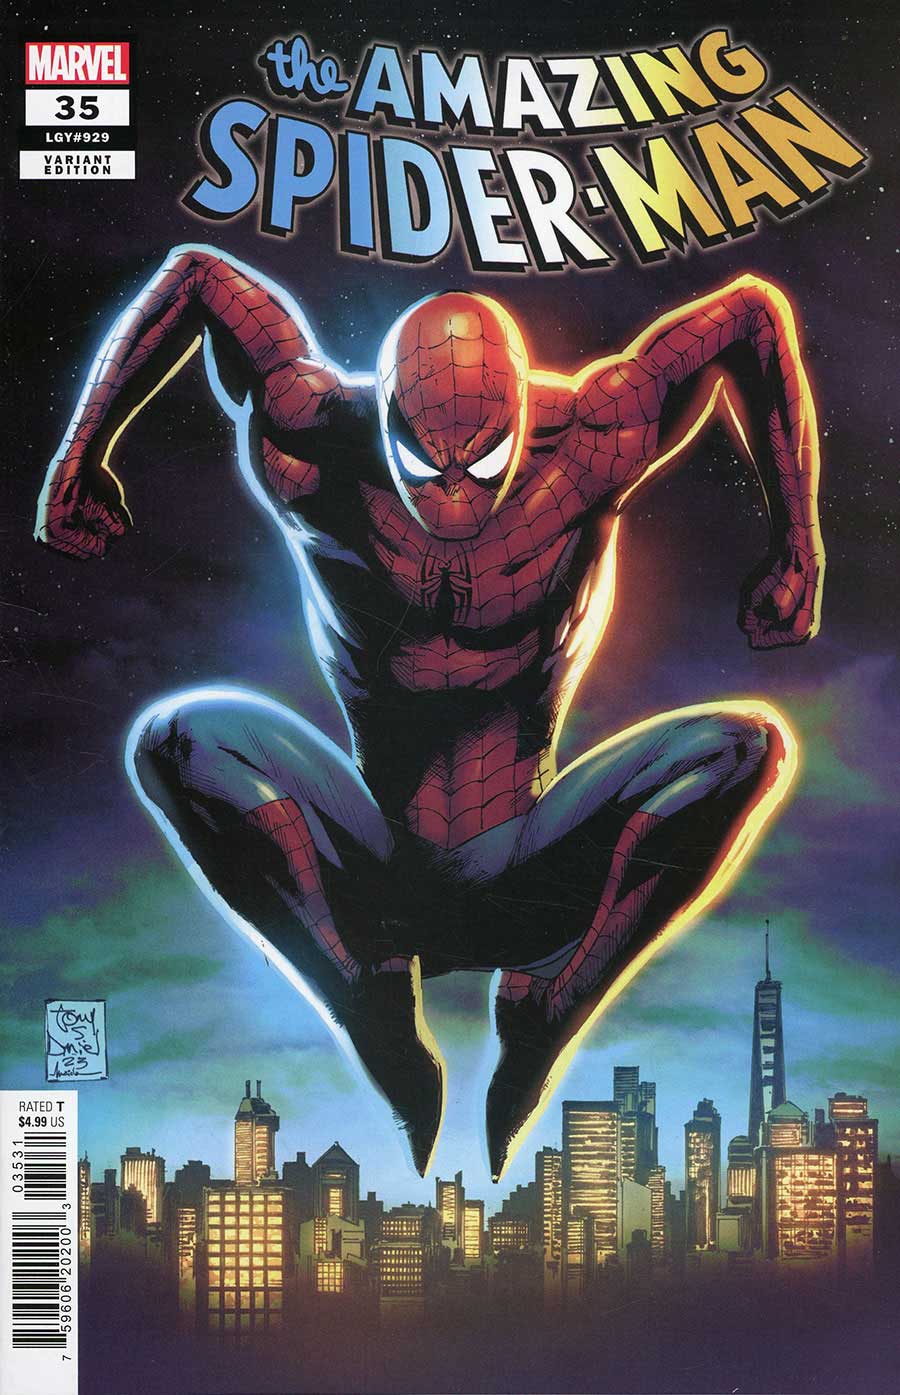 Amazing Spider-Man Vol 6 #35 Cover C Variant Tony S Daniel Cover